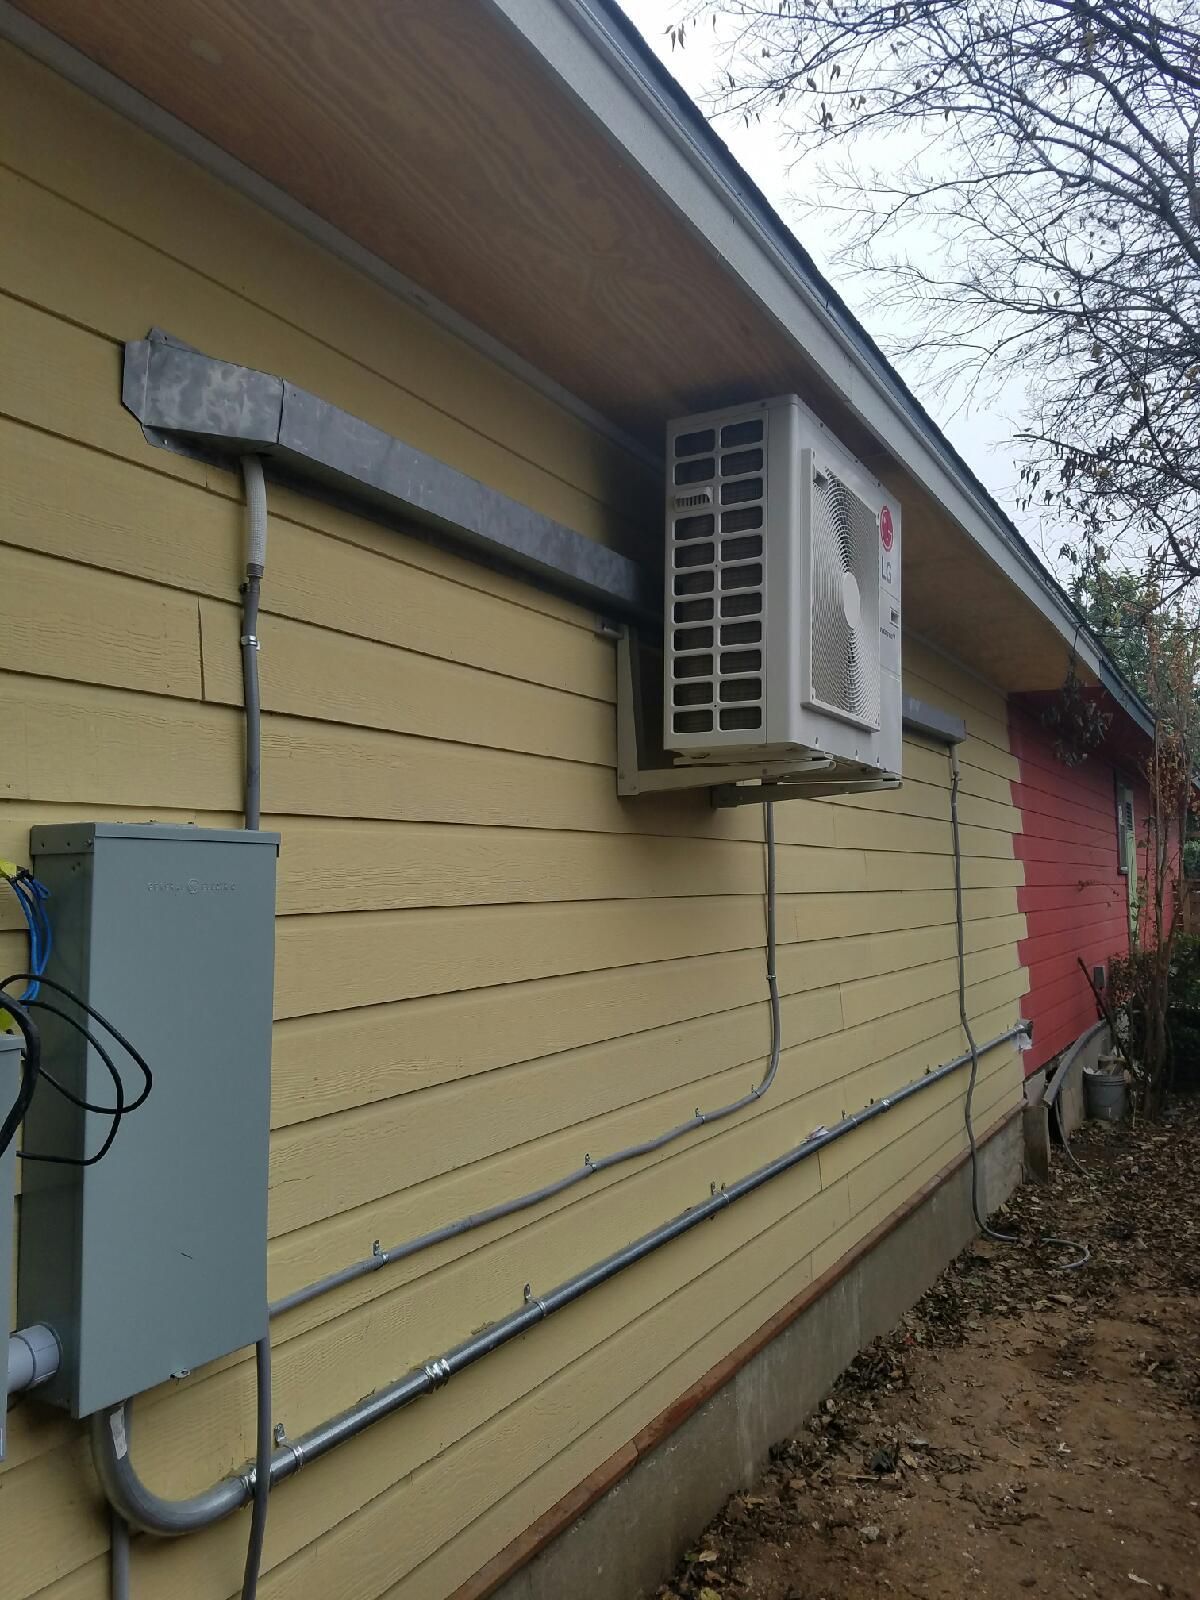 Outdoor LG air conditioner